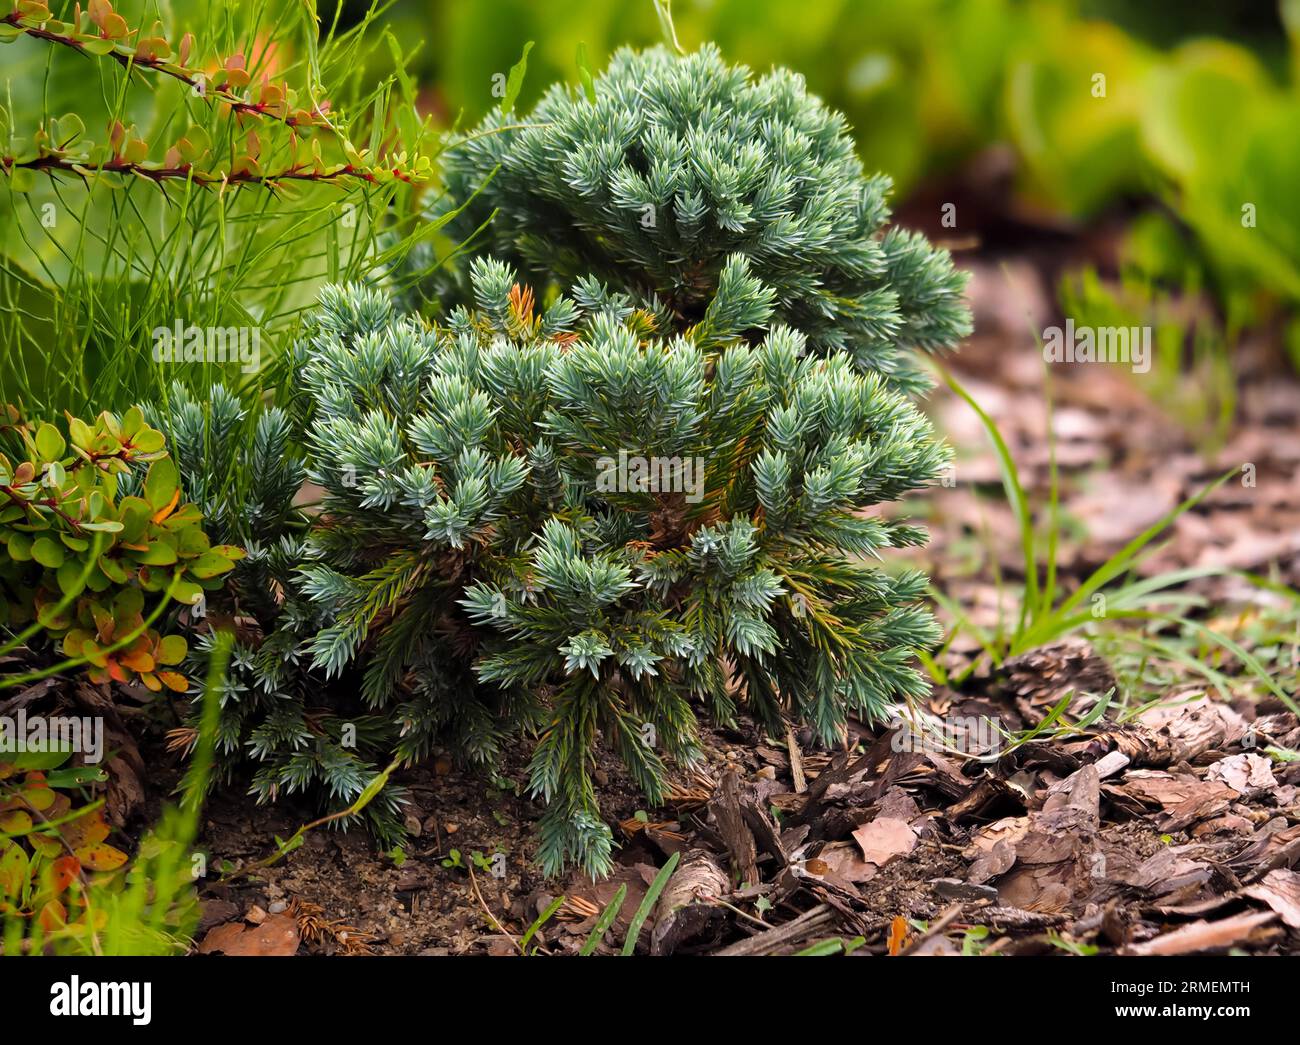 Juniperus squamata, conifer, evergreen plant, ornamental shrub in natural habitat close-up on, against other plants Stock Photo